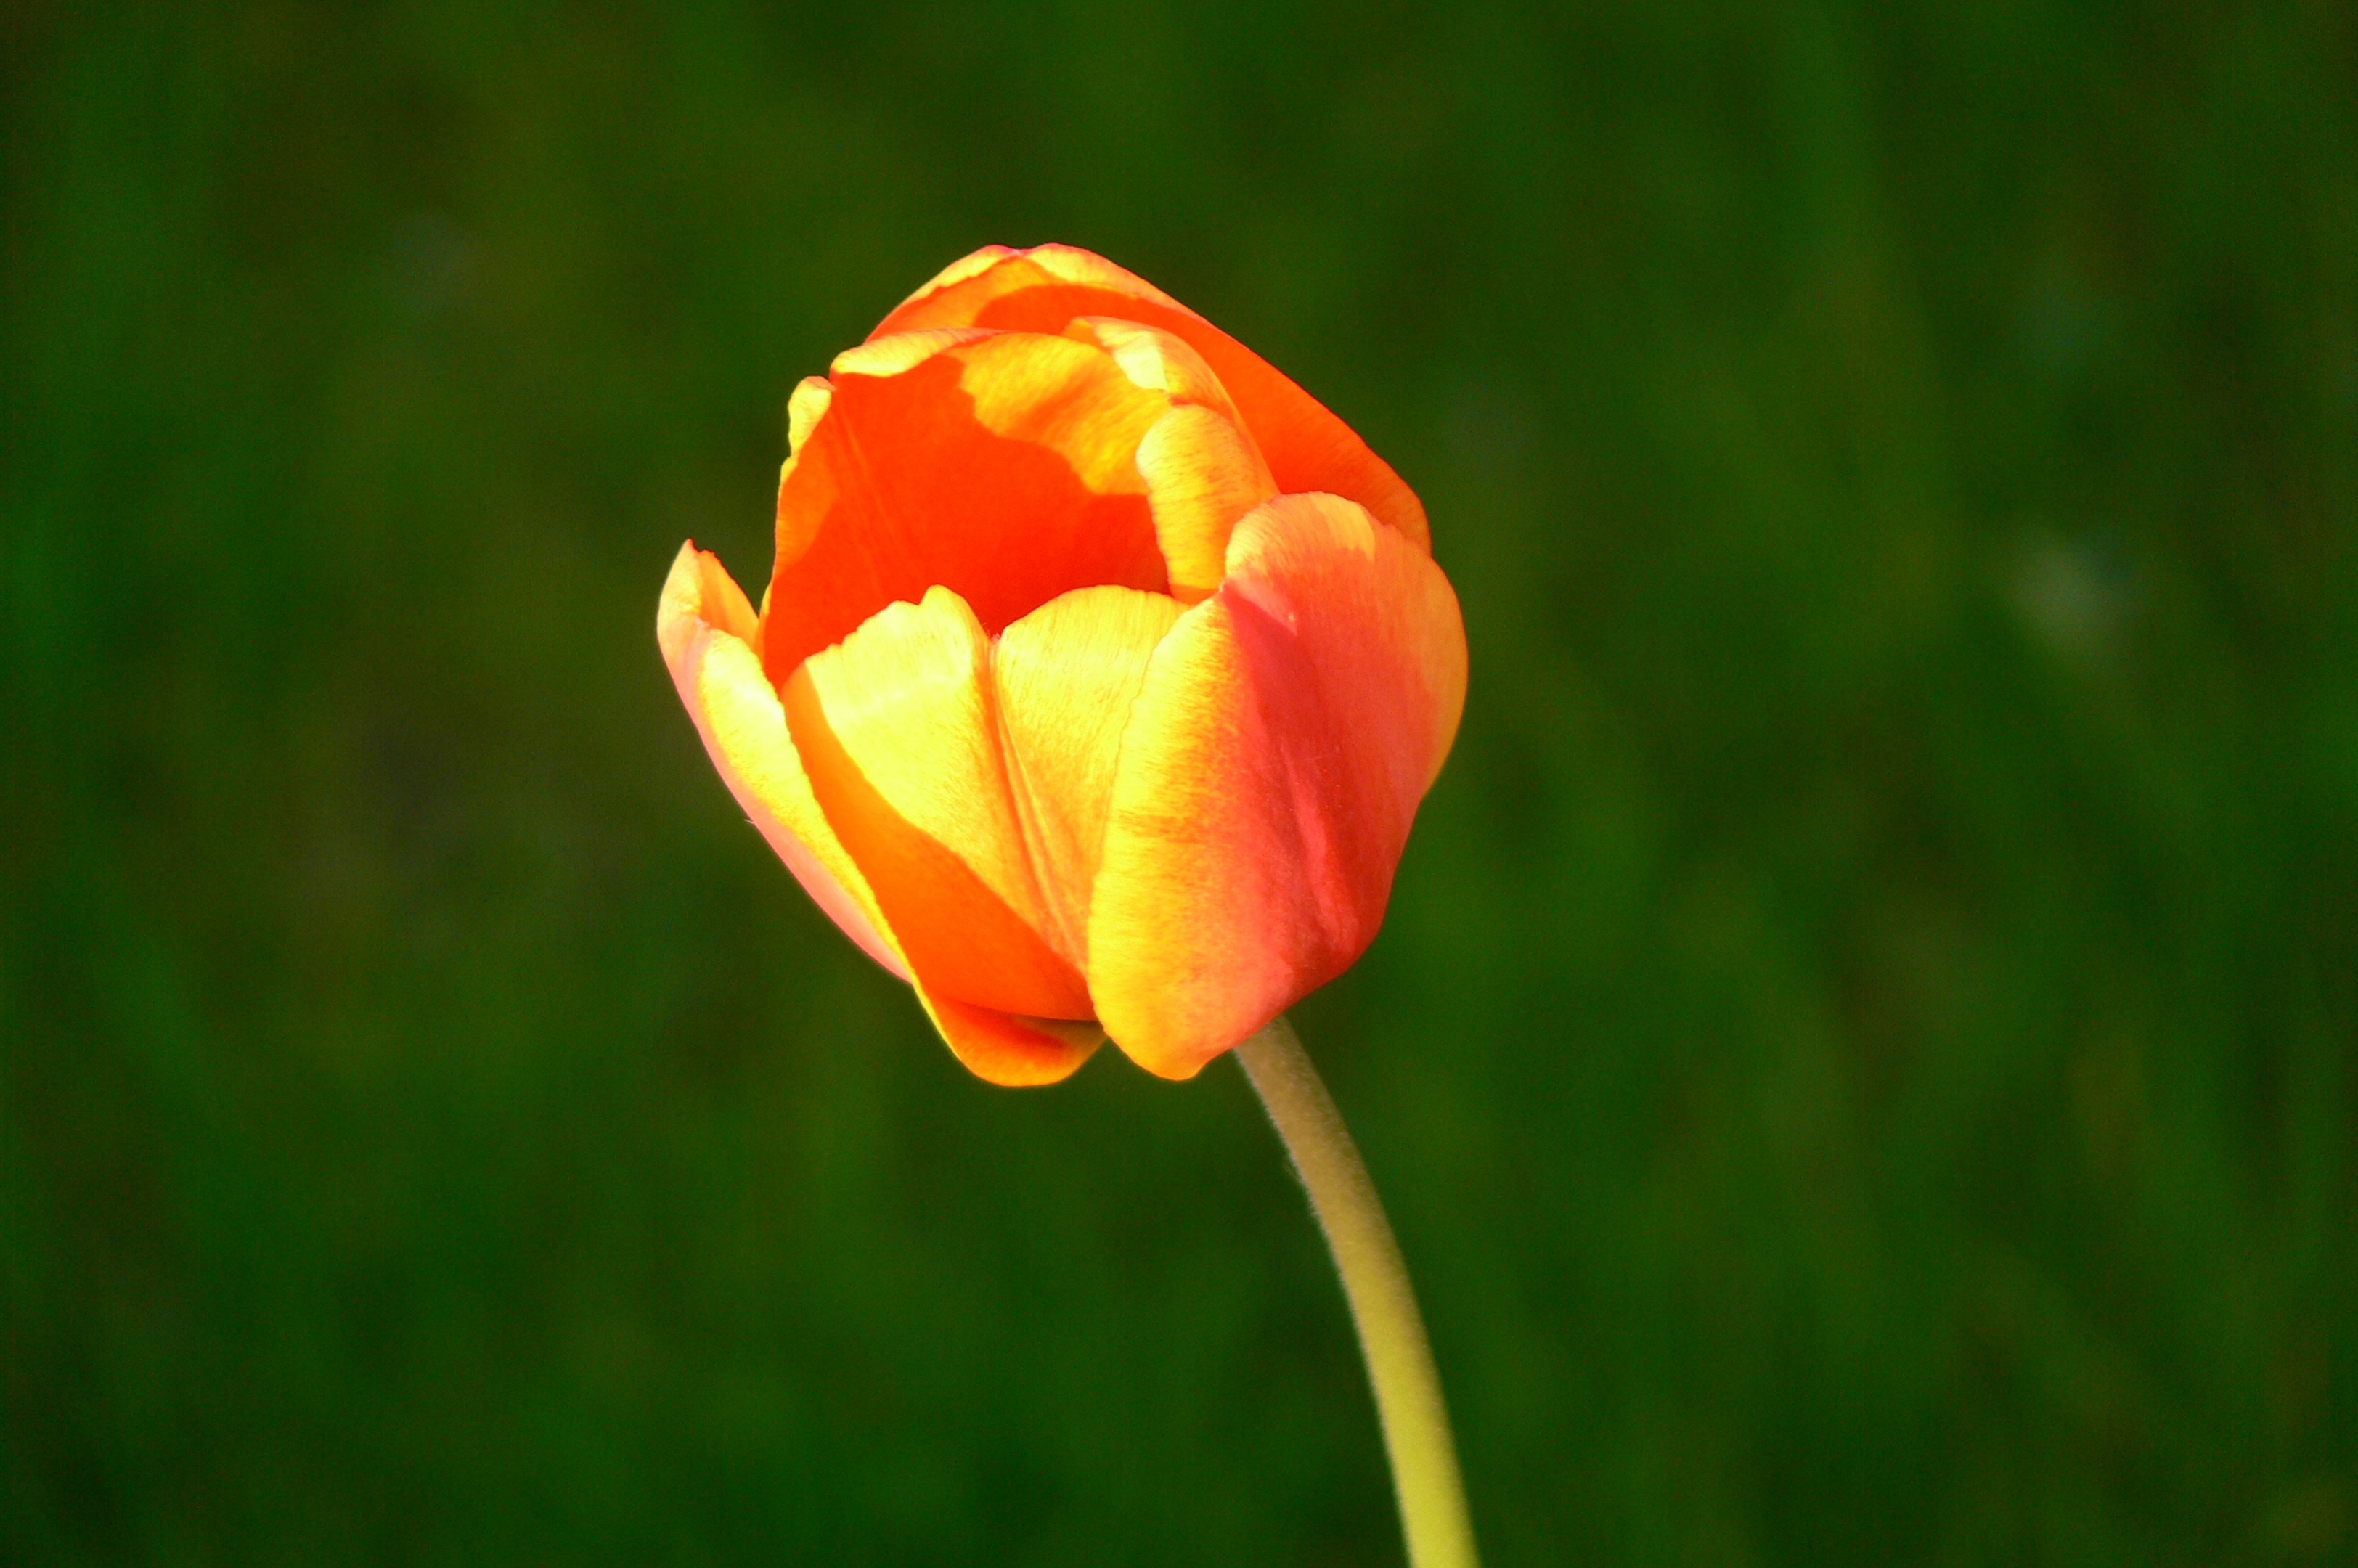 yellow and orange petaled flower